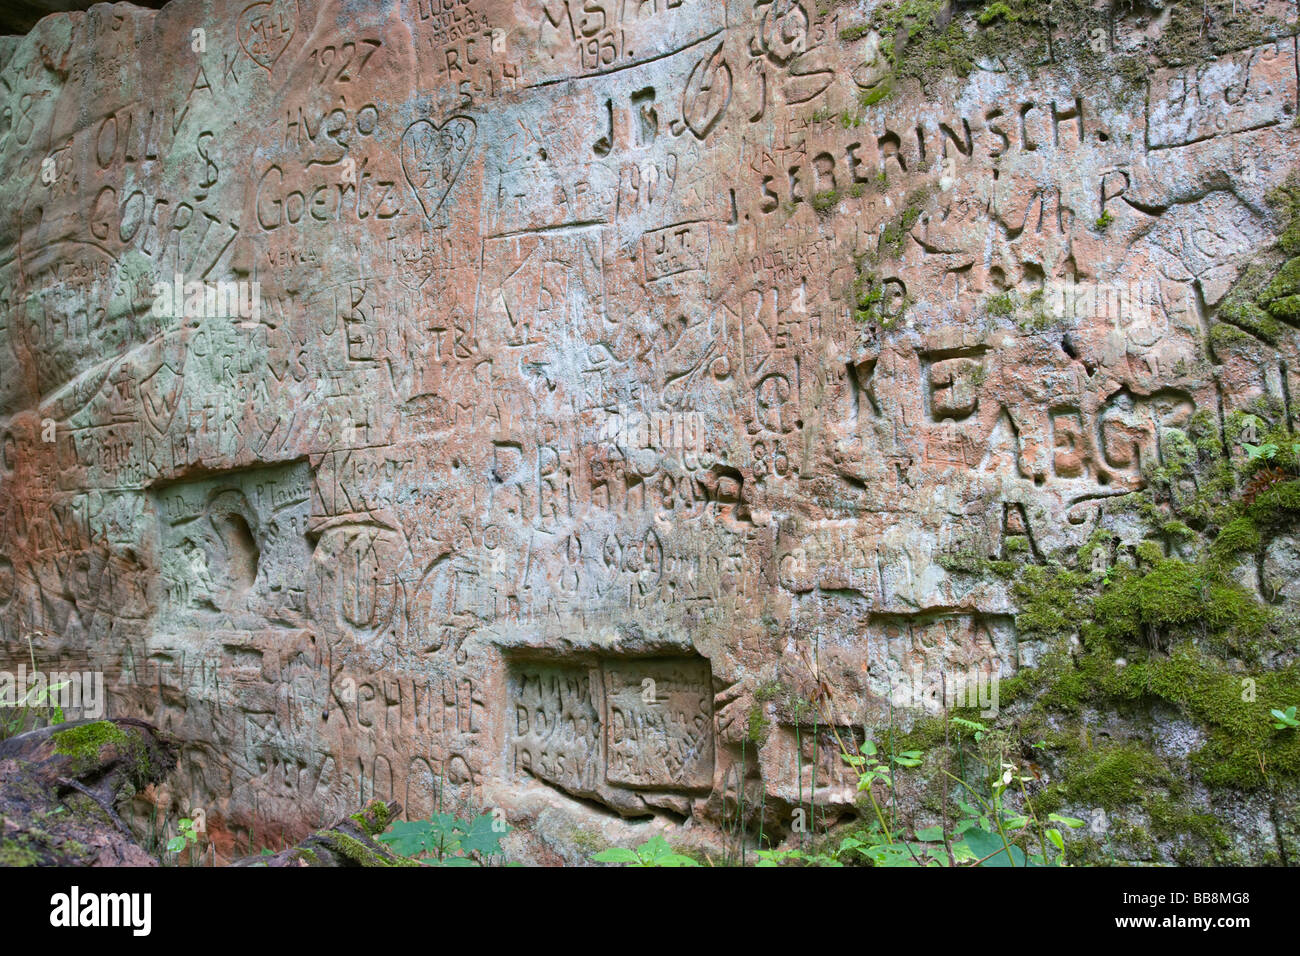 Inscriptions on the sandstone outcrop of Pikenes krauja, Pikene glen, Sigulda, Latvia, Baltic region Stock Photo